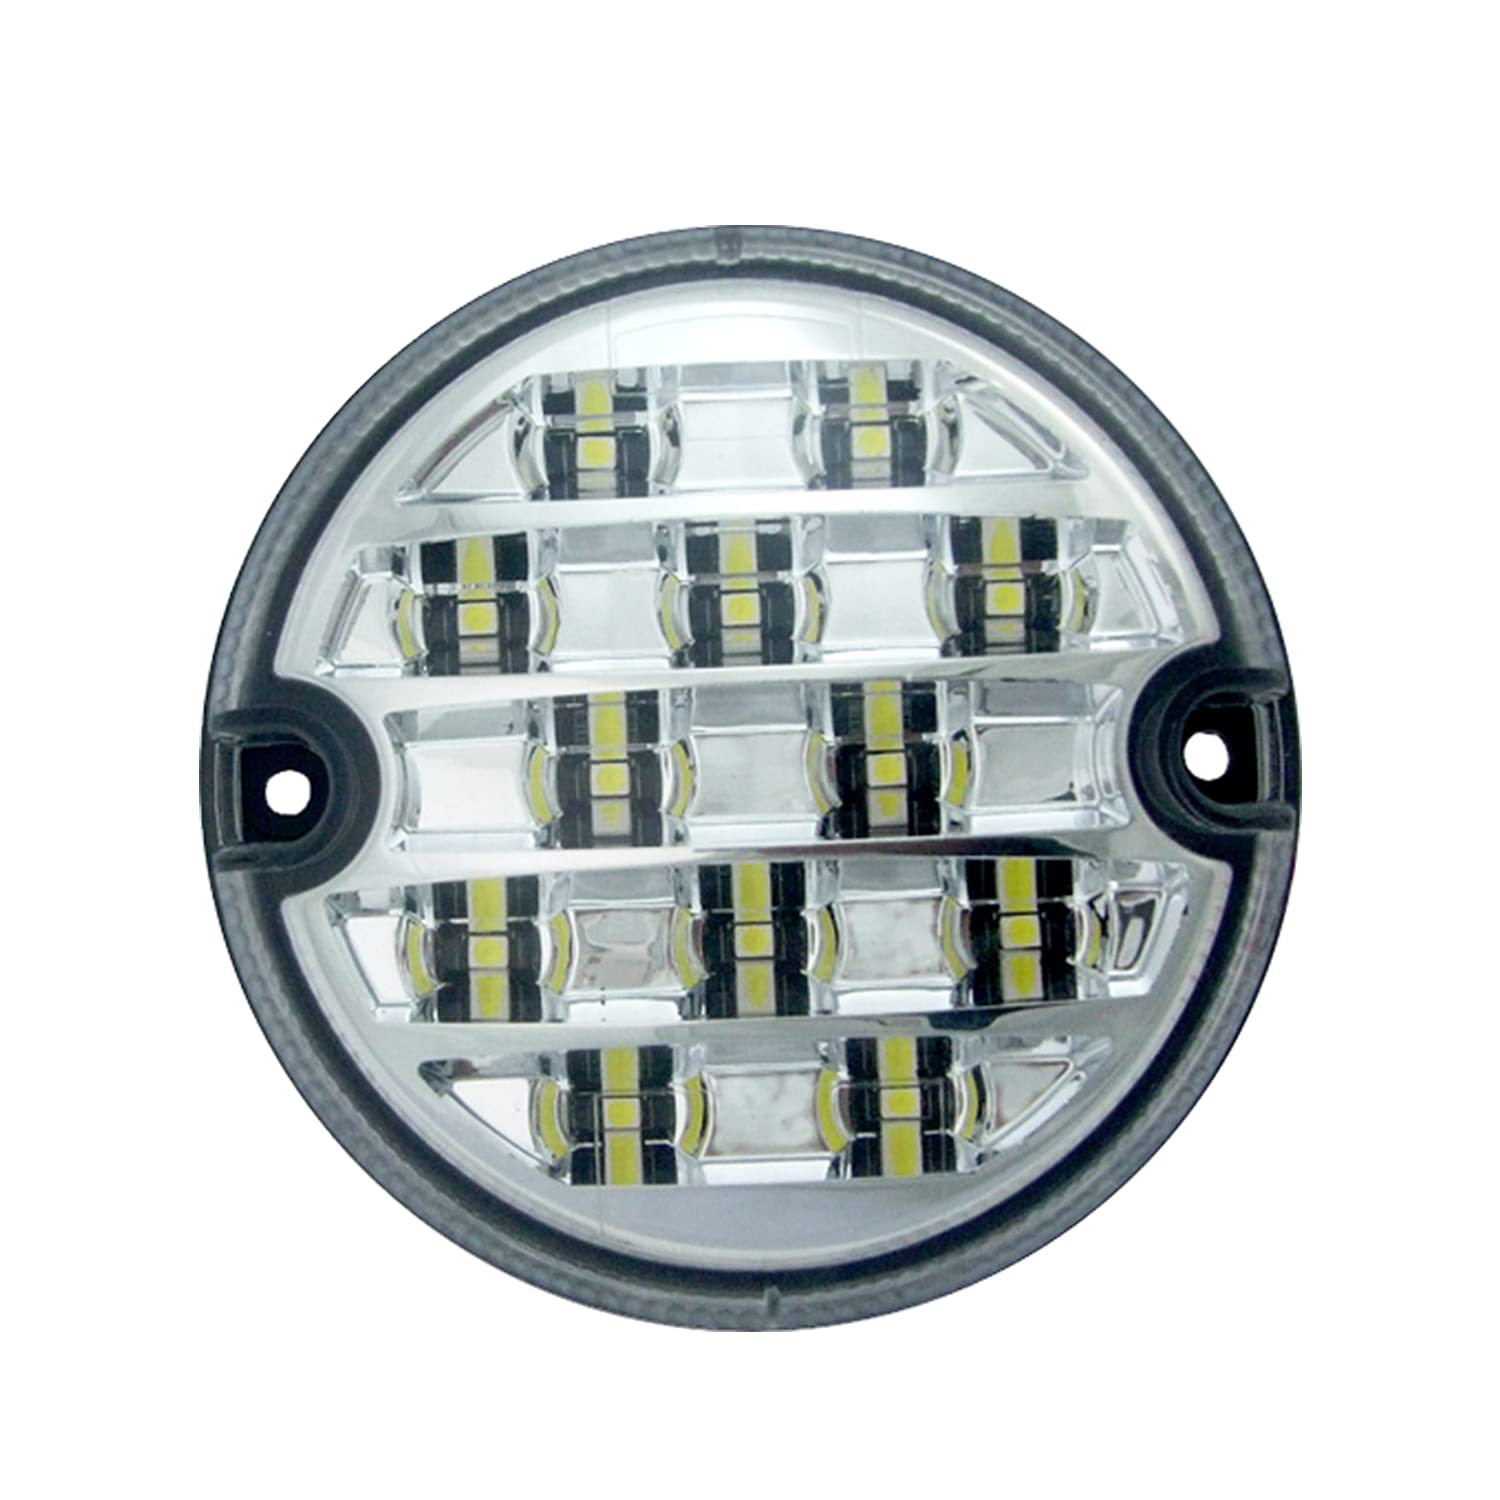 lighteu®, Forda LED Rückfahrscheinwerfer für LKW, Anhänger, Wohnwagen von lighteu